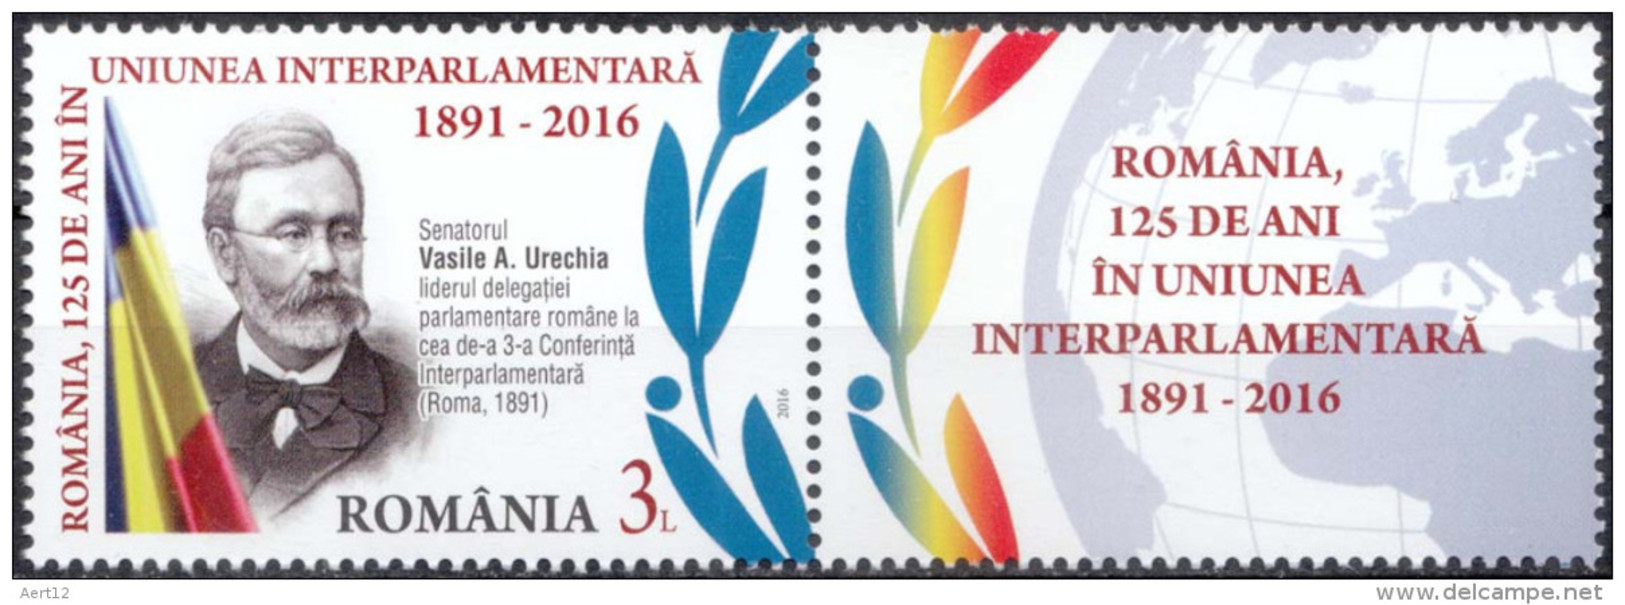 ROMANIA, 2016, 125 YEARS IN THE IPU, International Organizations, Famous People, Stamp Vith Label, MNH (**), LPMP 2101 - Ongebruikt